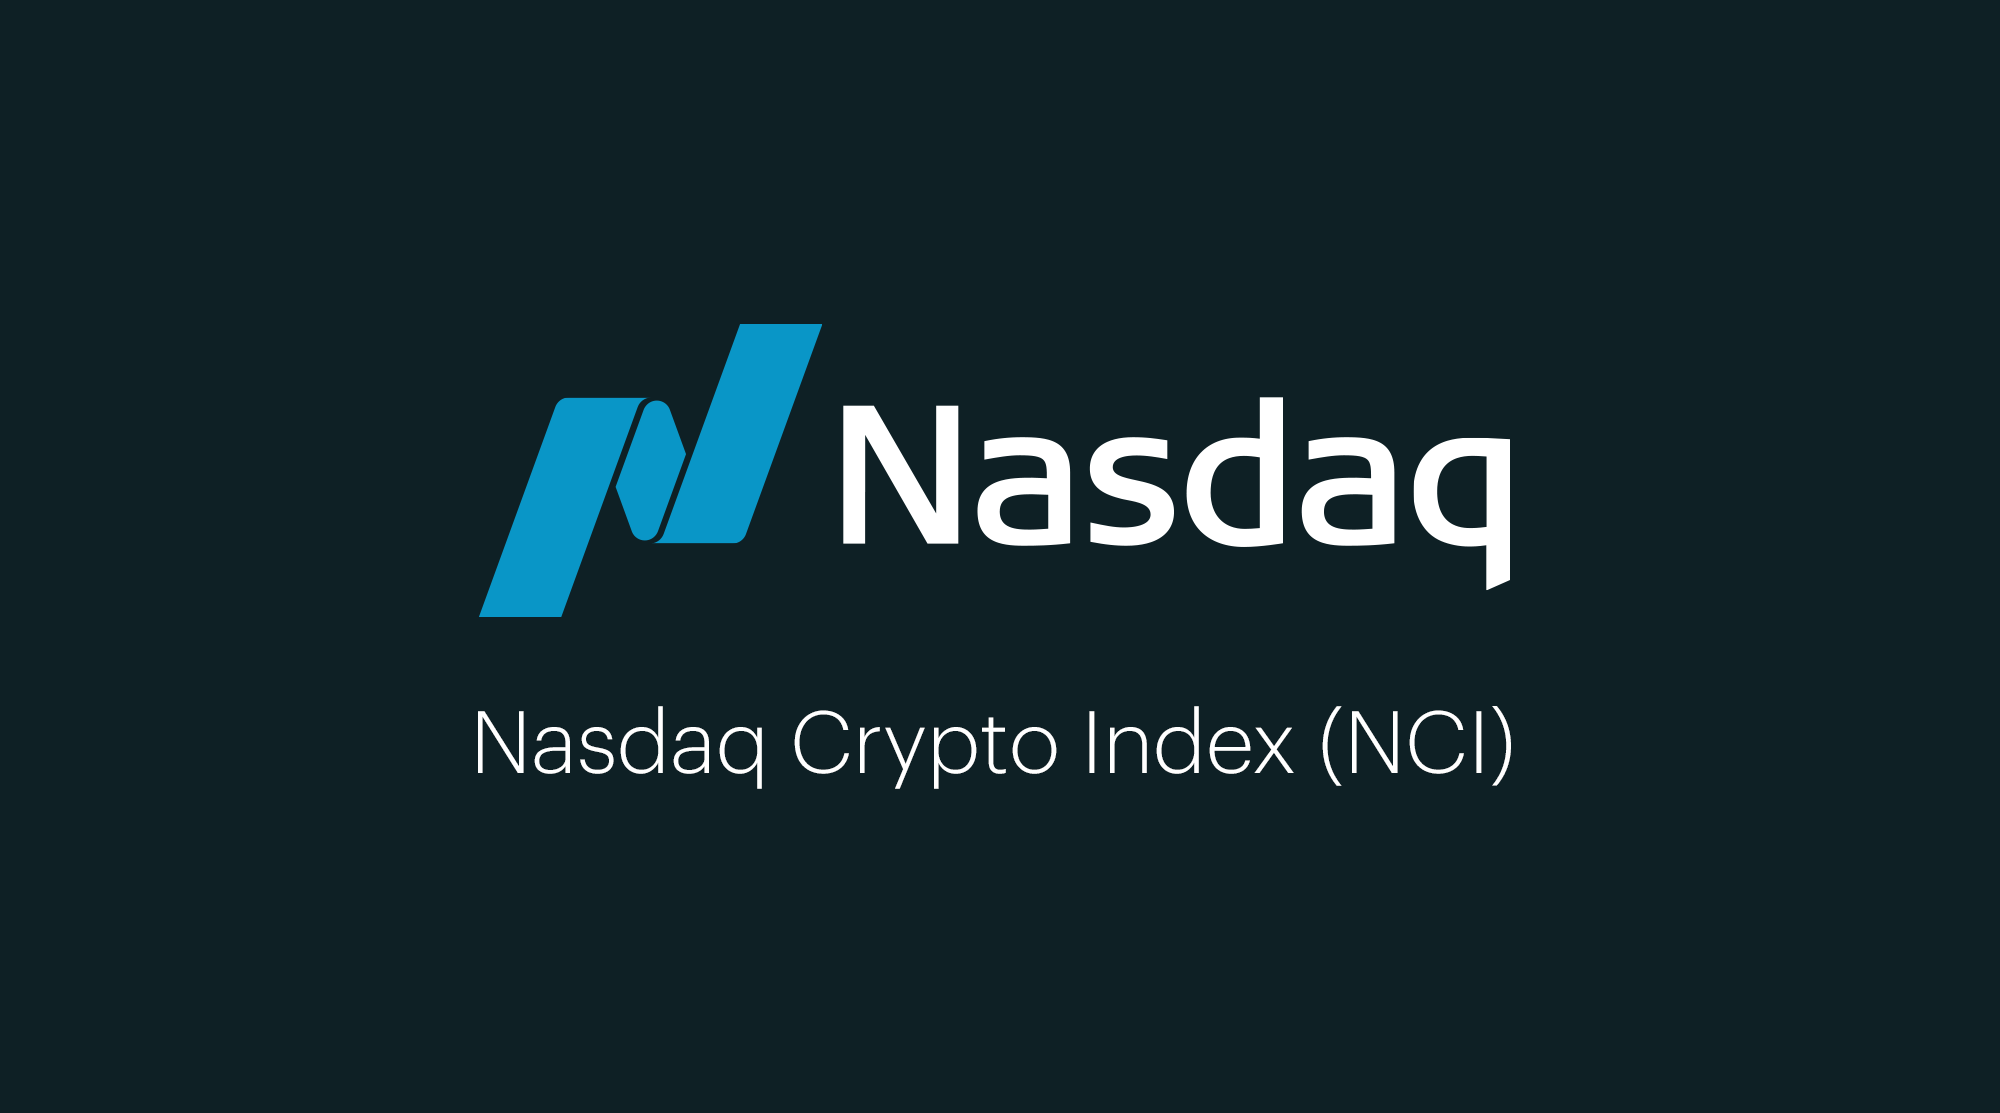 Nasdaq Crypto Index Family – Free Float Supplies Announcement